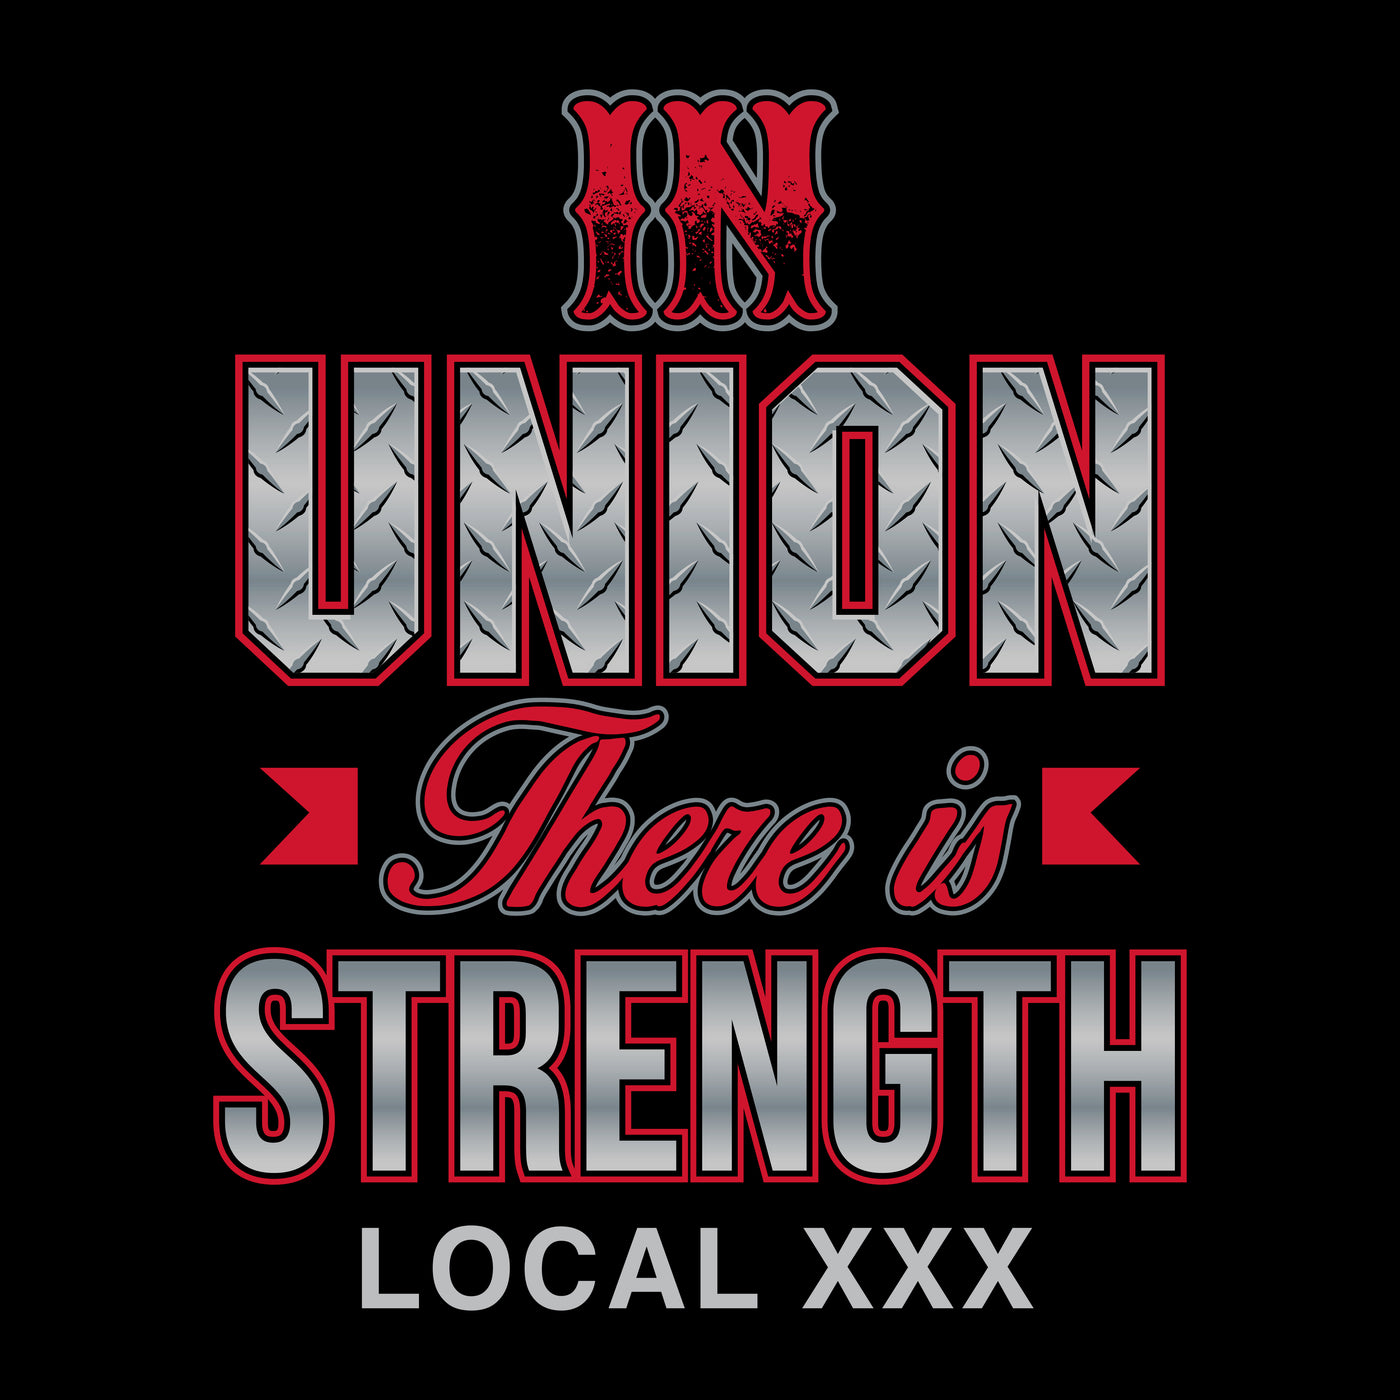 Union Strength